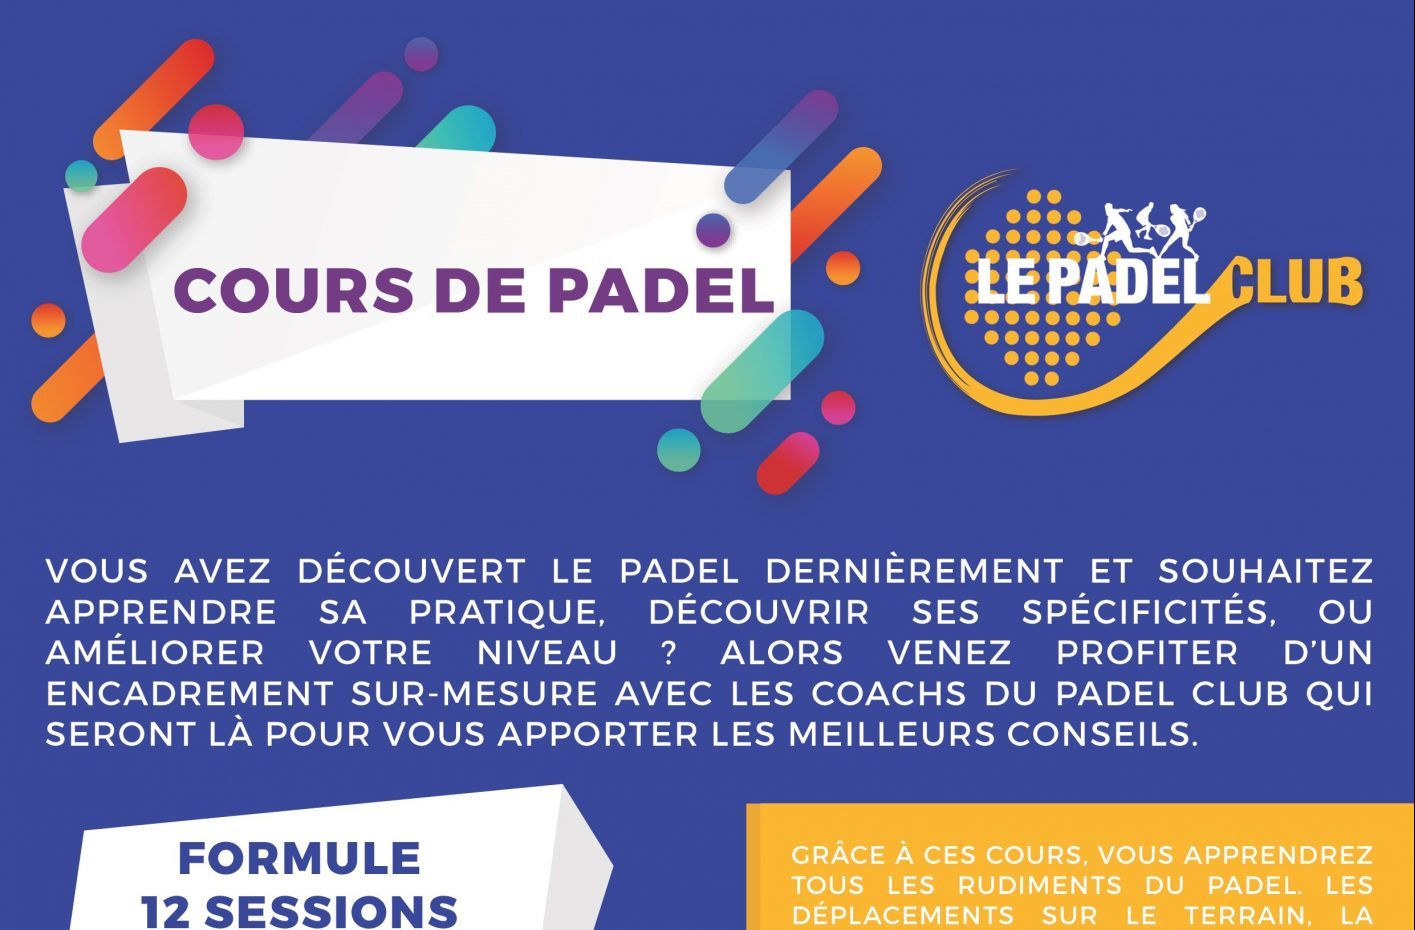 Cursussen van padel in Parijs - The Padel club